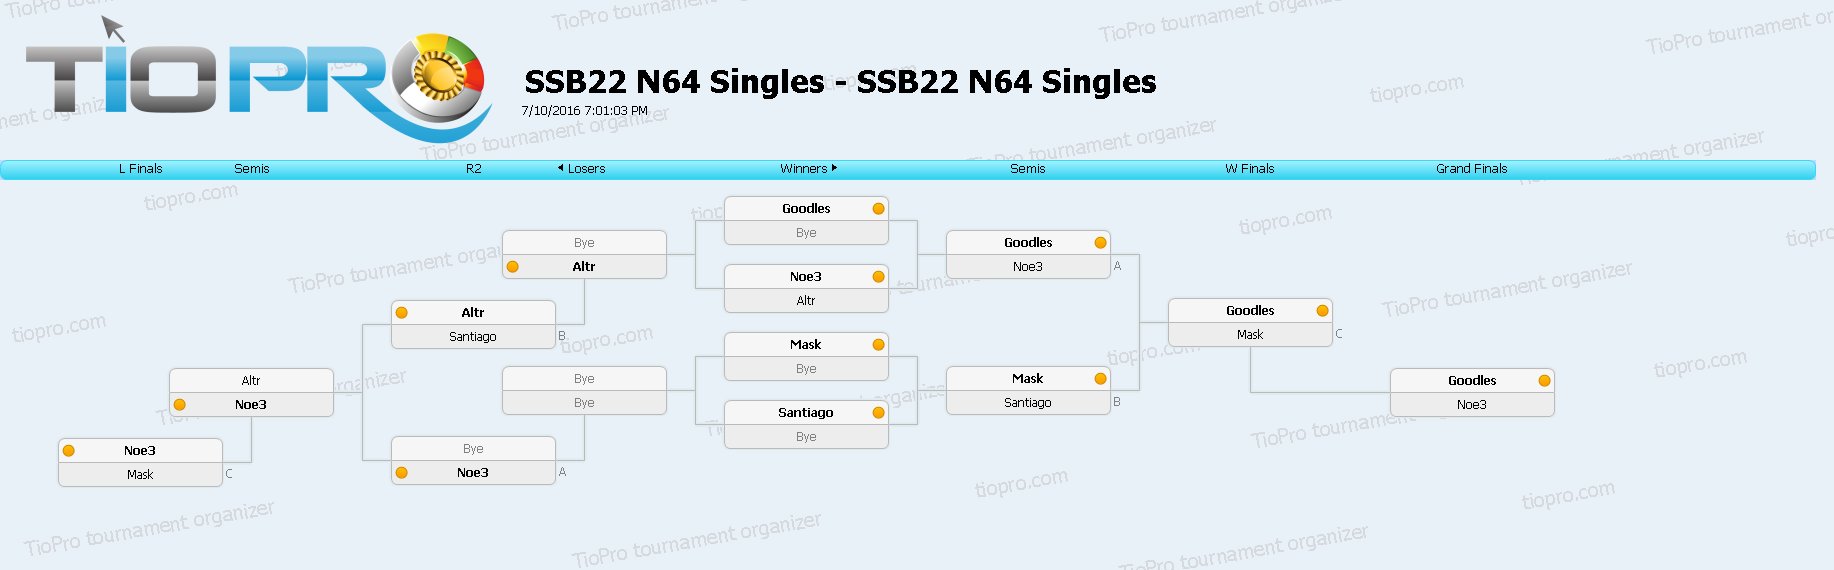 SSB22 N64 Singles